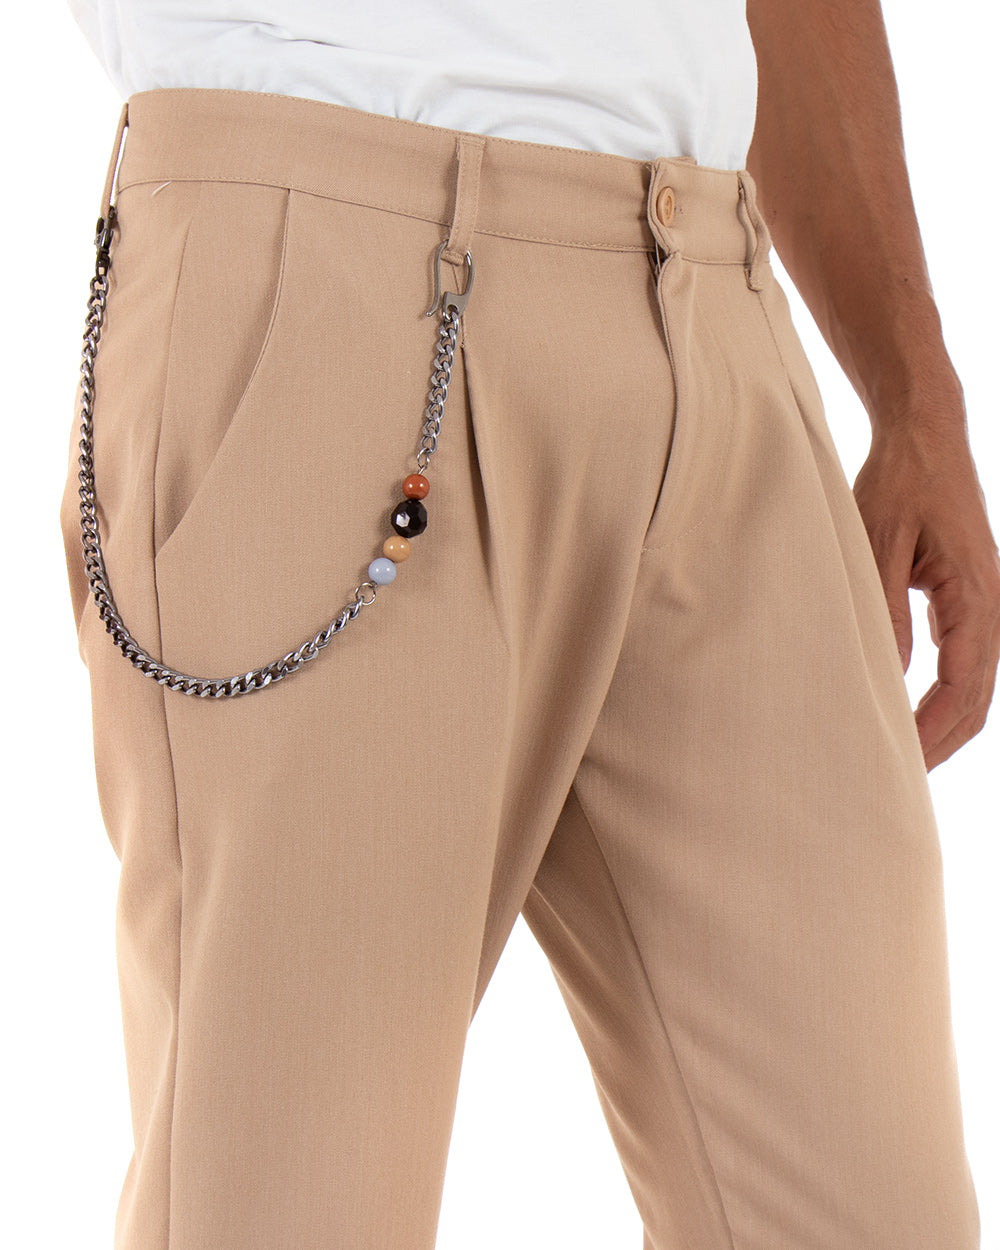 Pantaloni Uomo Tasca America Viscosa Camel Capri Casual Classico Pinces GIOSAL-P5429A